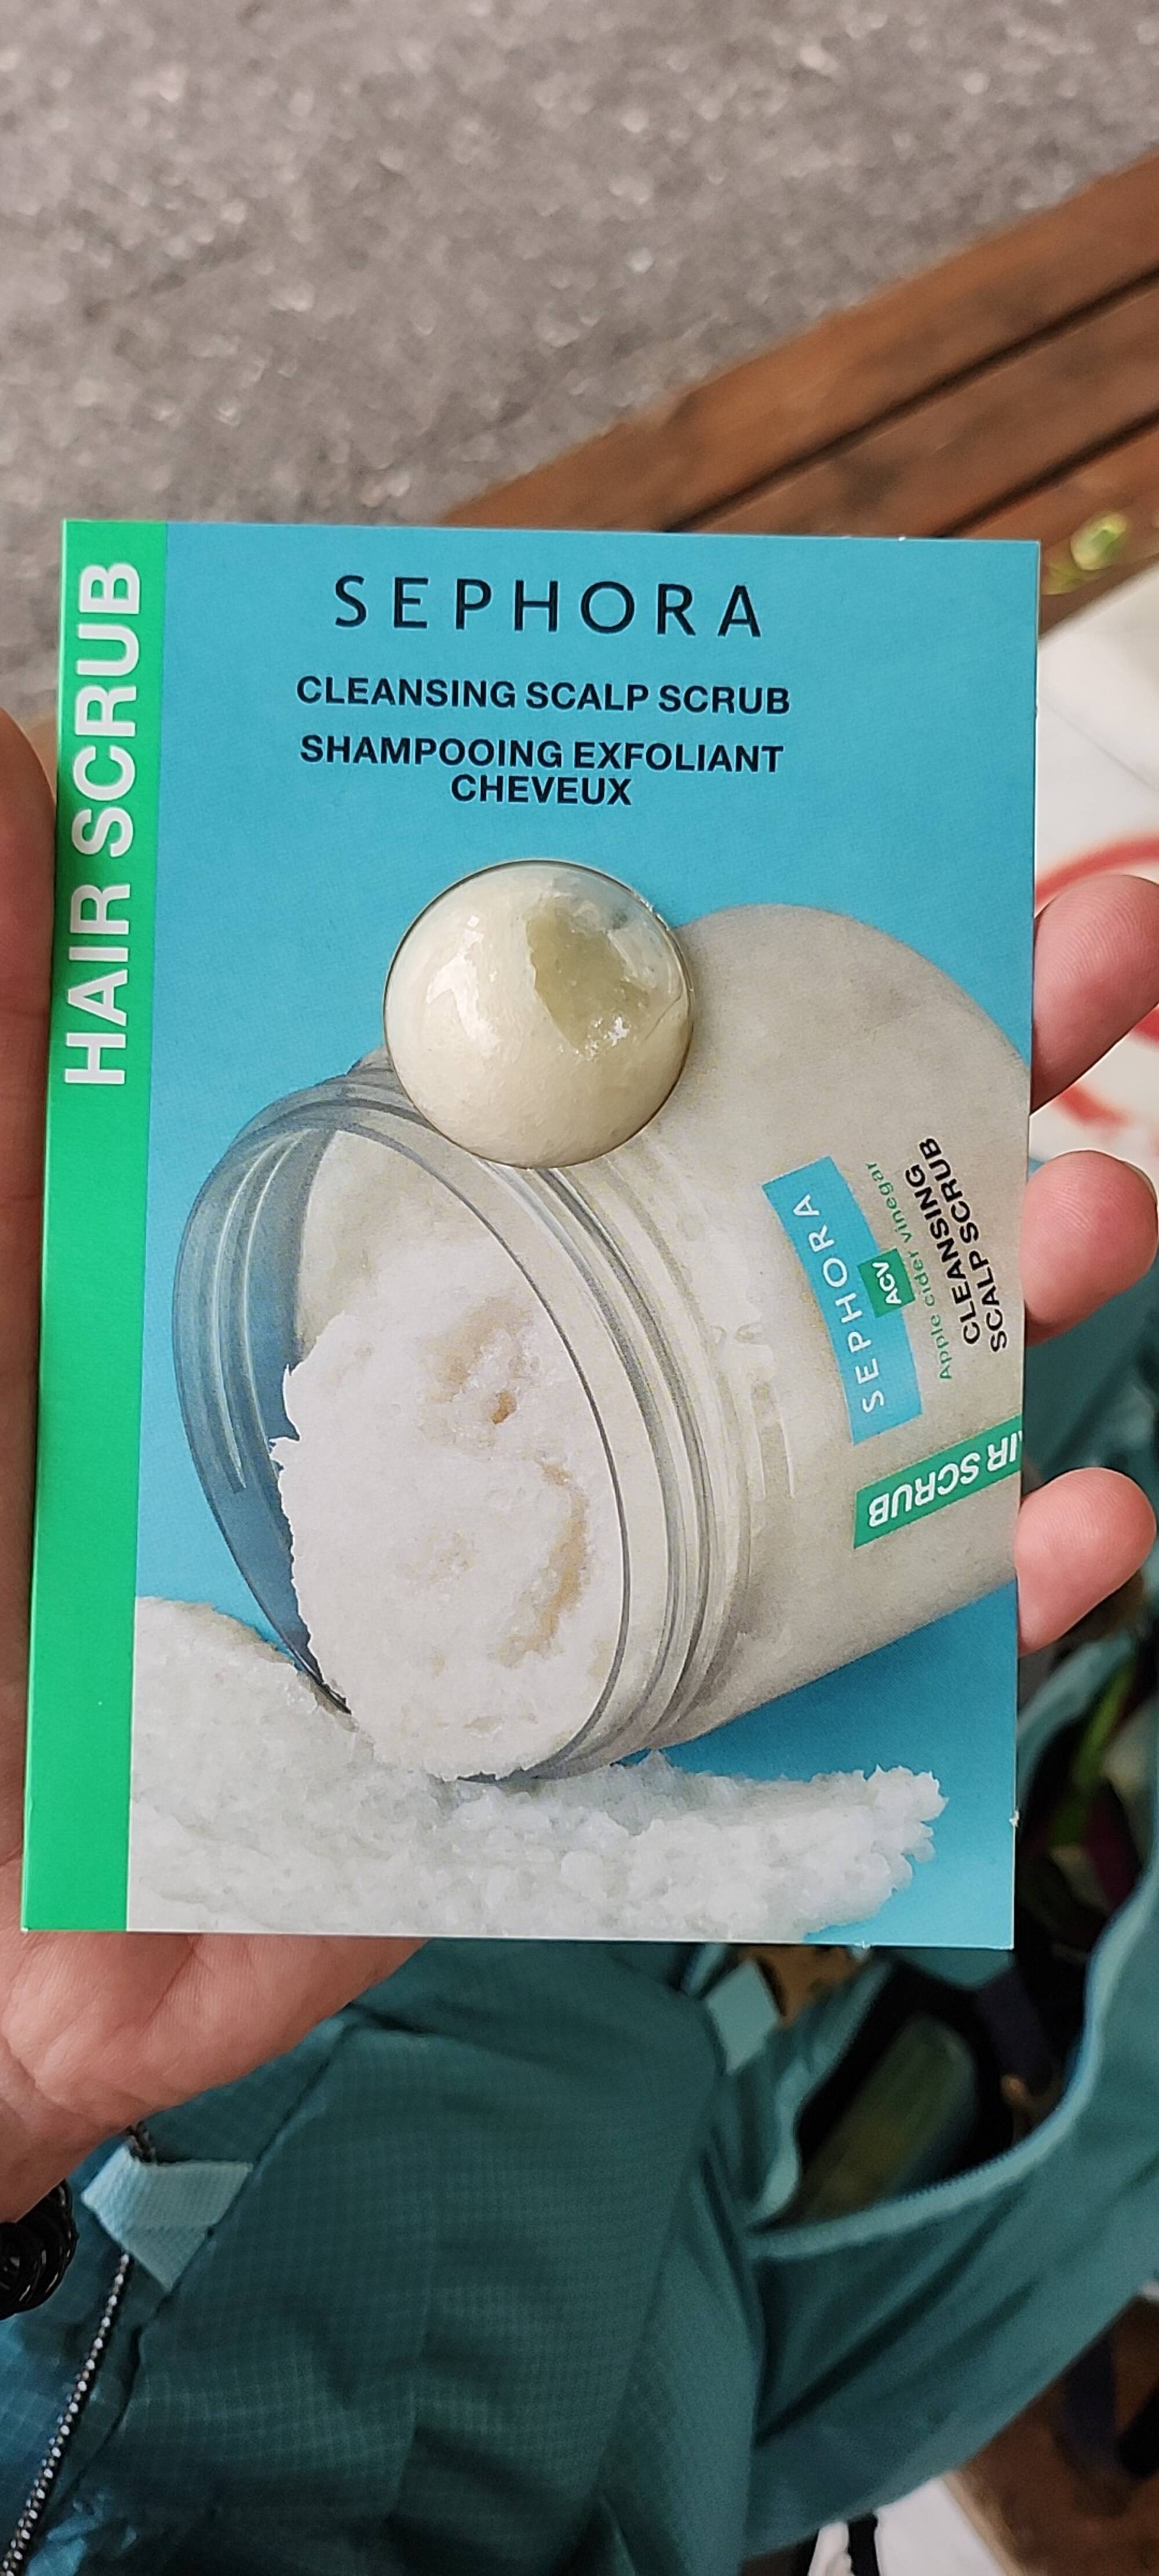 SEPHORA - Shampooing exfoliant cheveux 